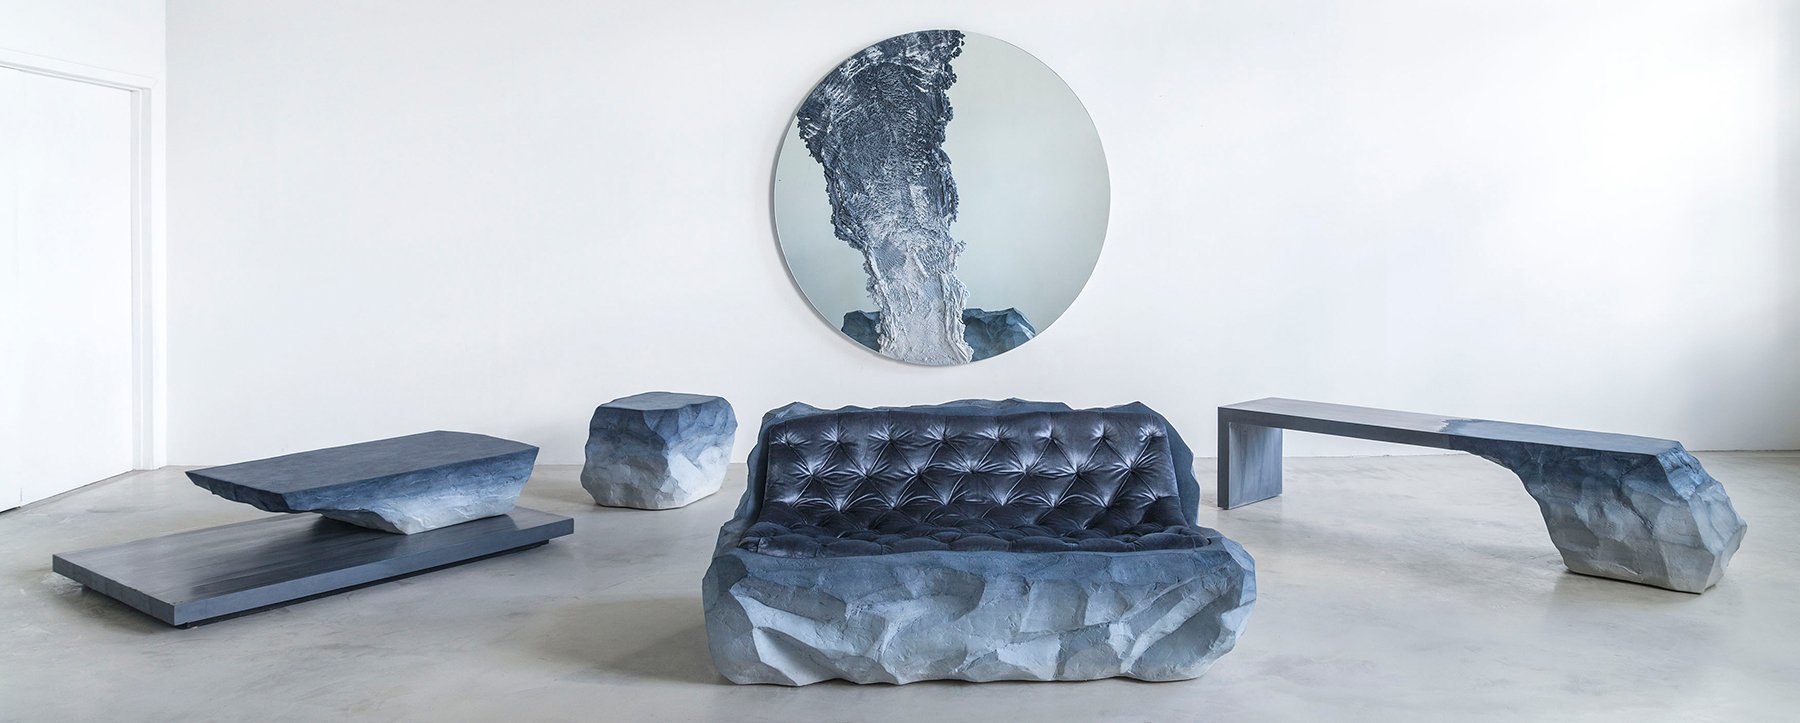 Фернандо Мастранджело (Fernando Mastrangelo): sculptural Furniture